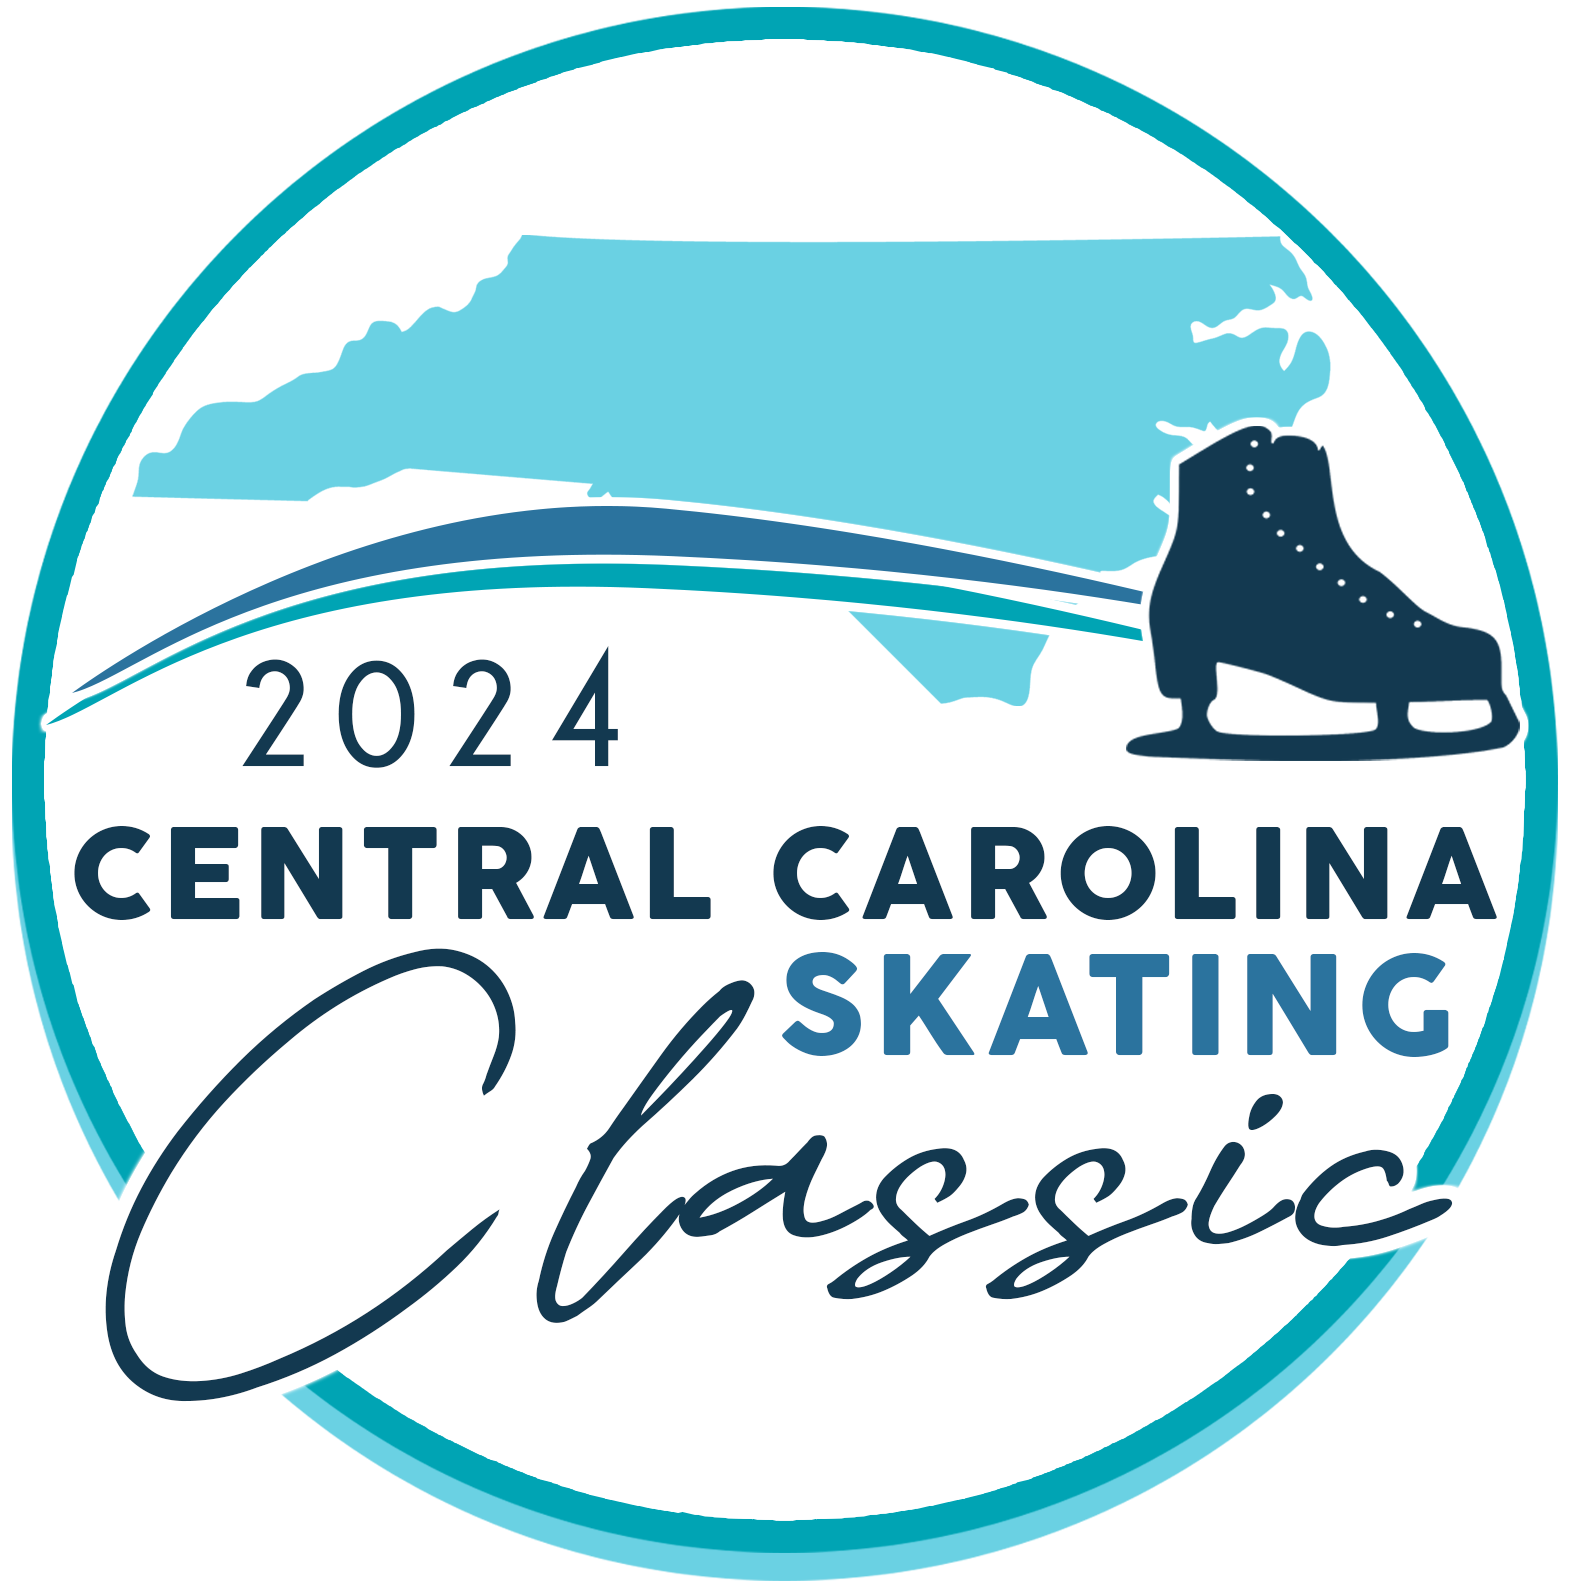 Central Carolina Classic 2024